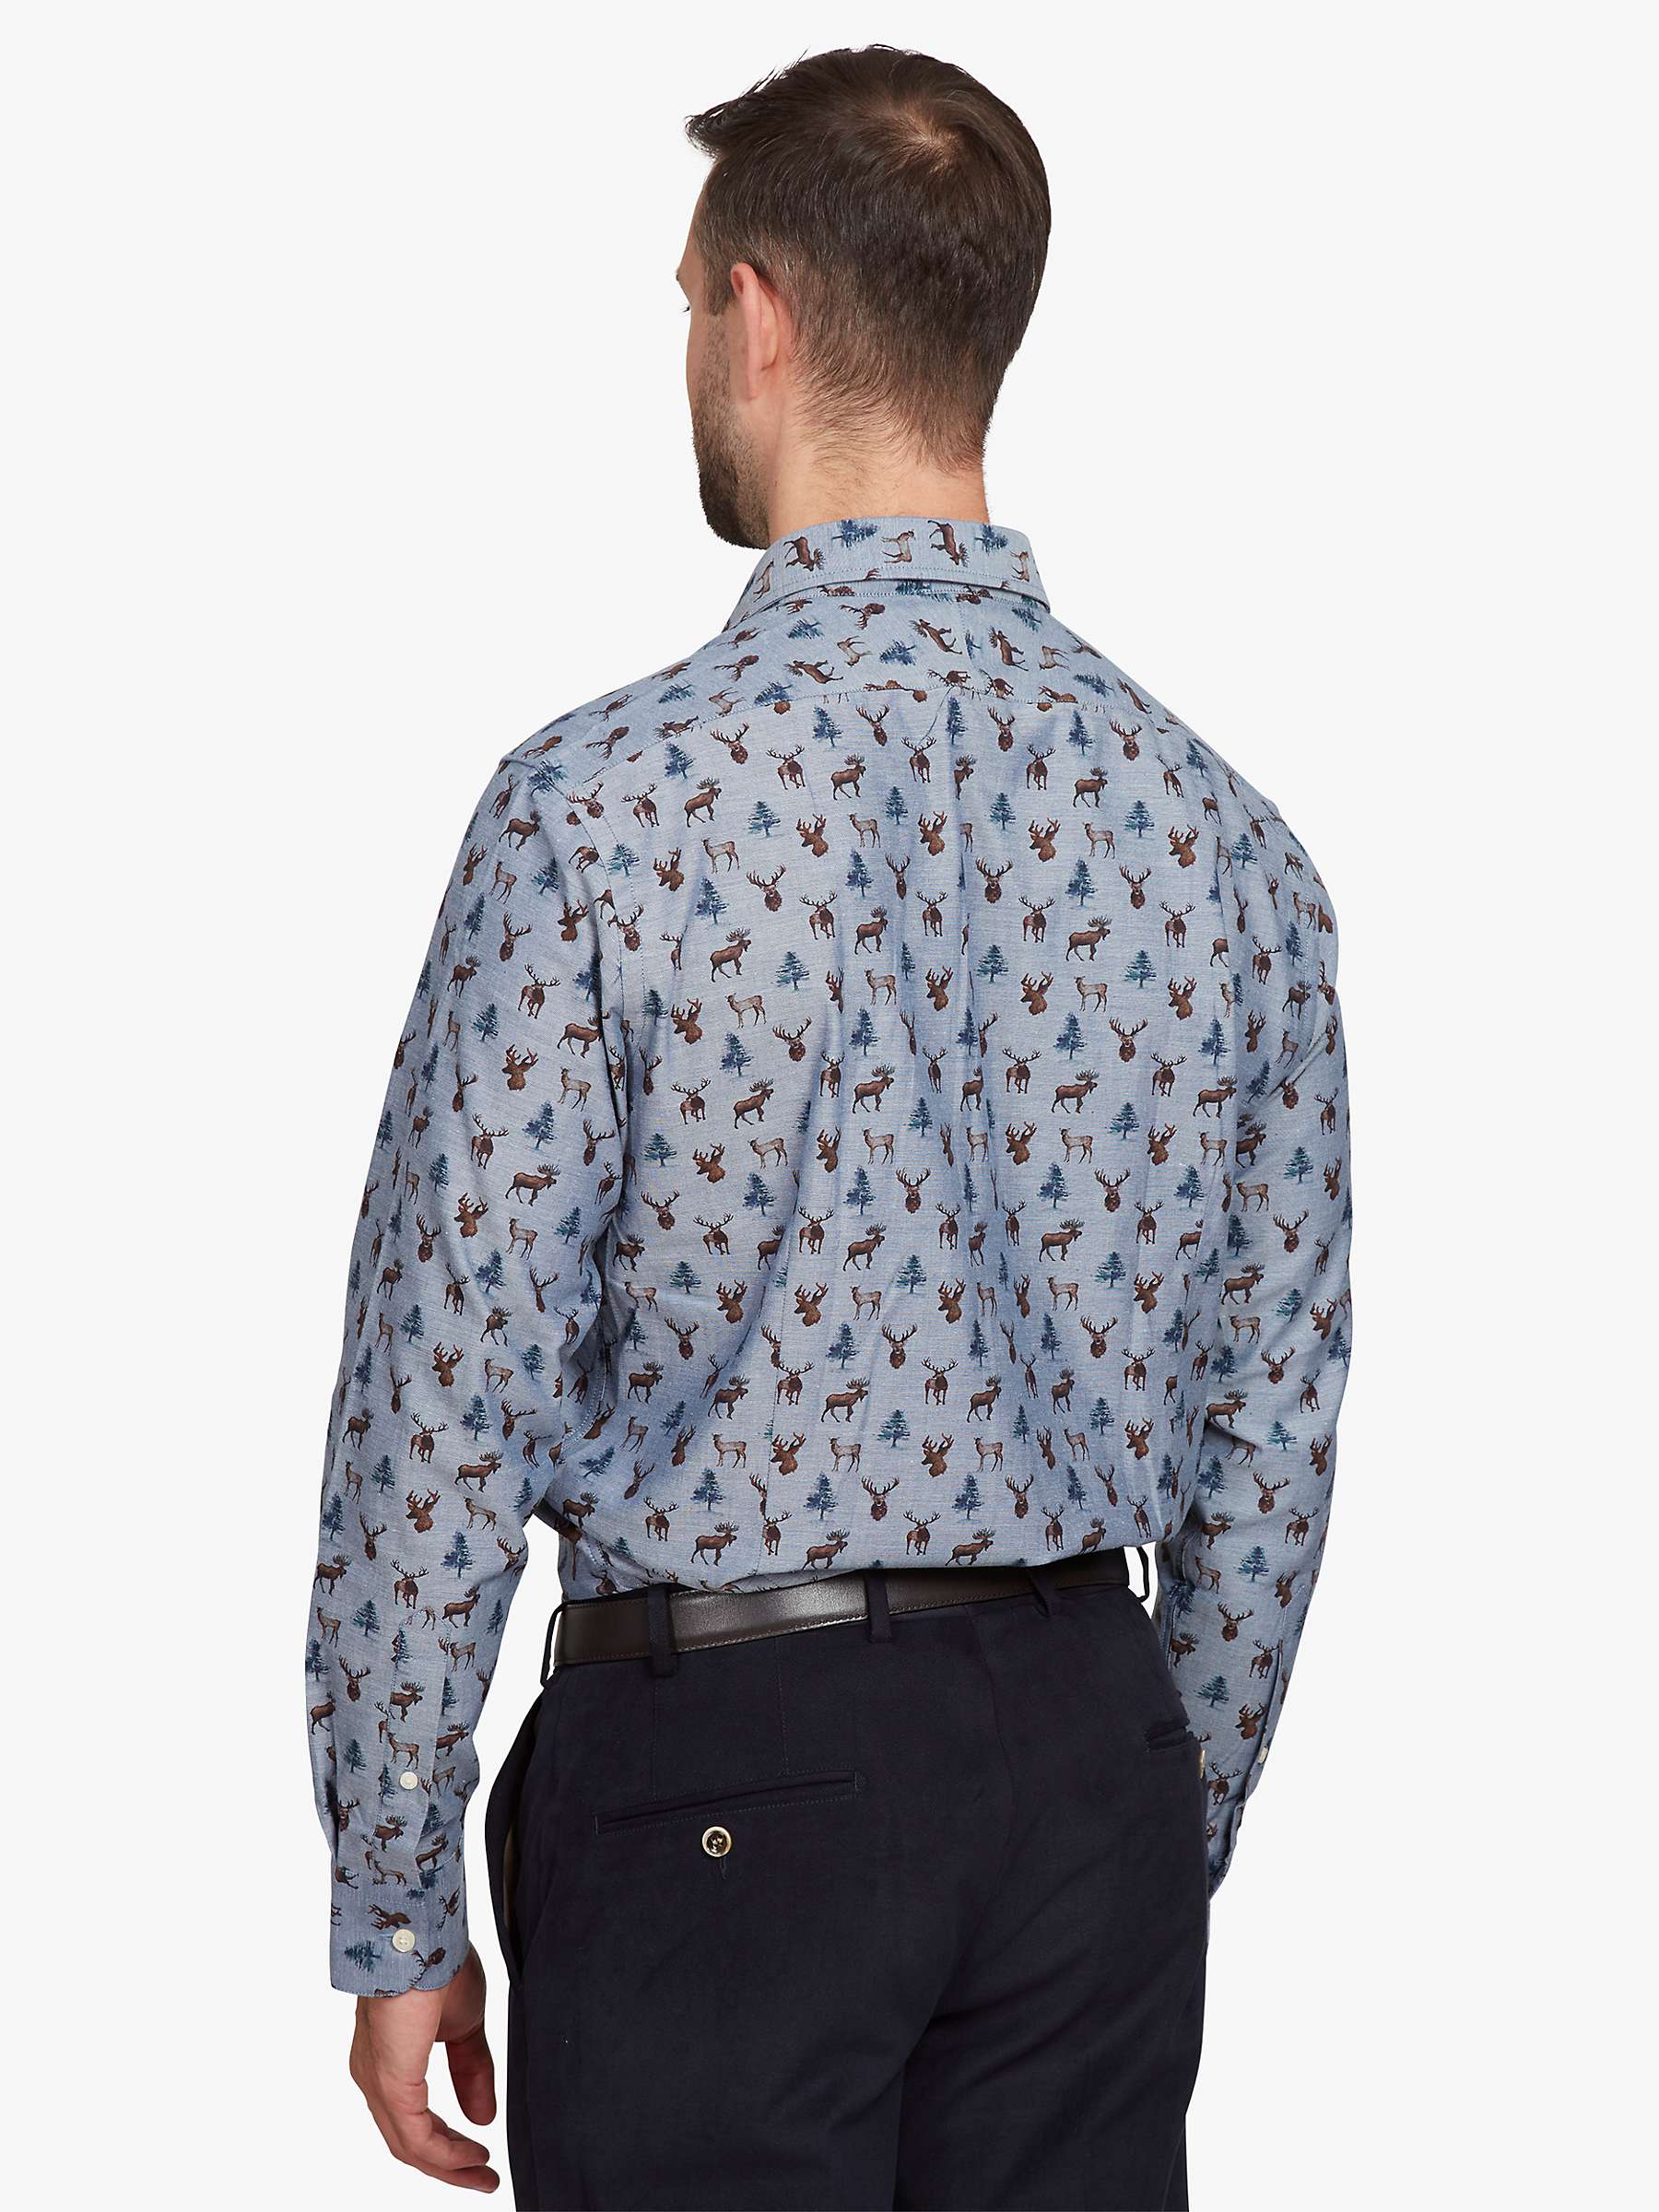 Buy Simon Carter Deer Shirt, Blue/Multi Online at johnlewis.com